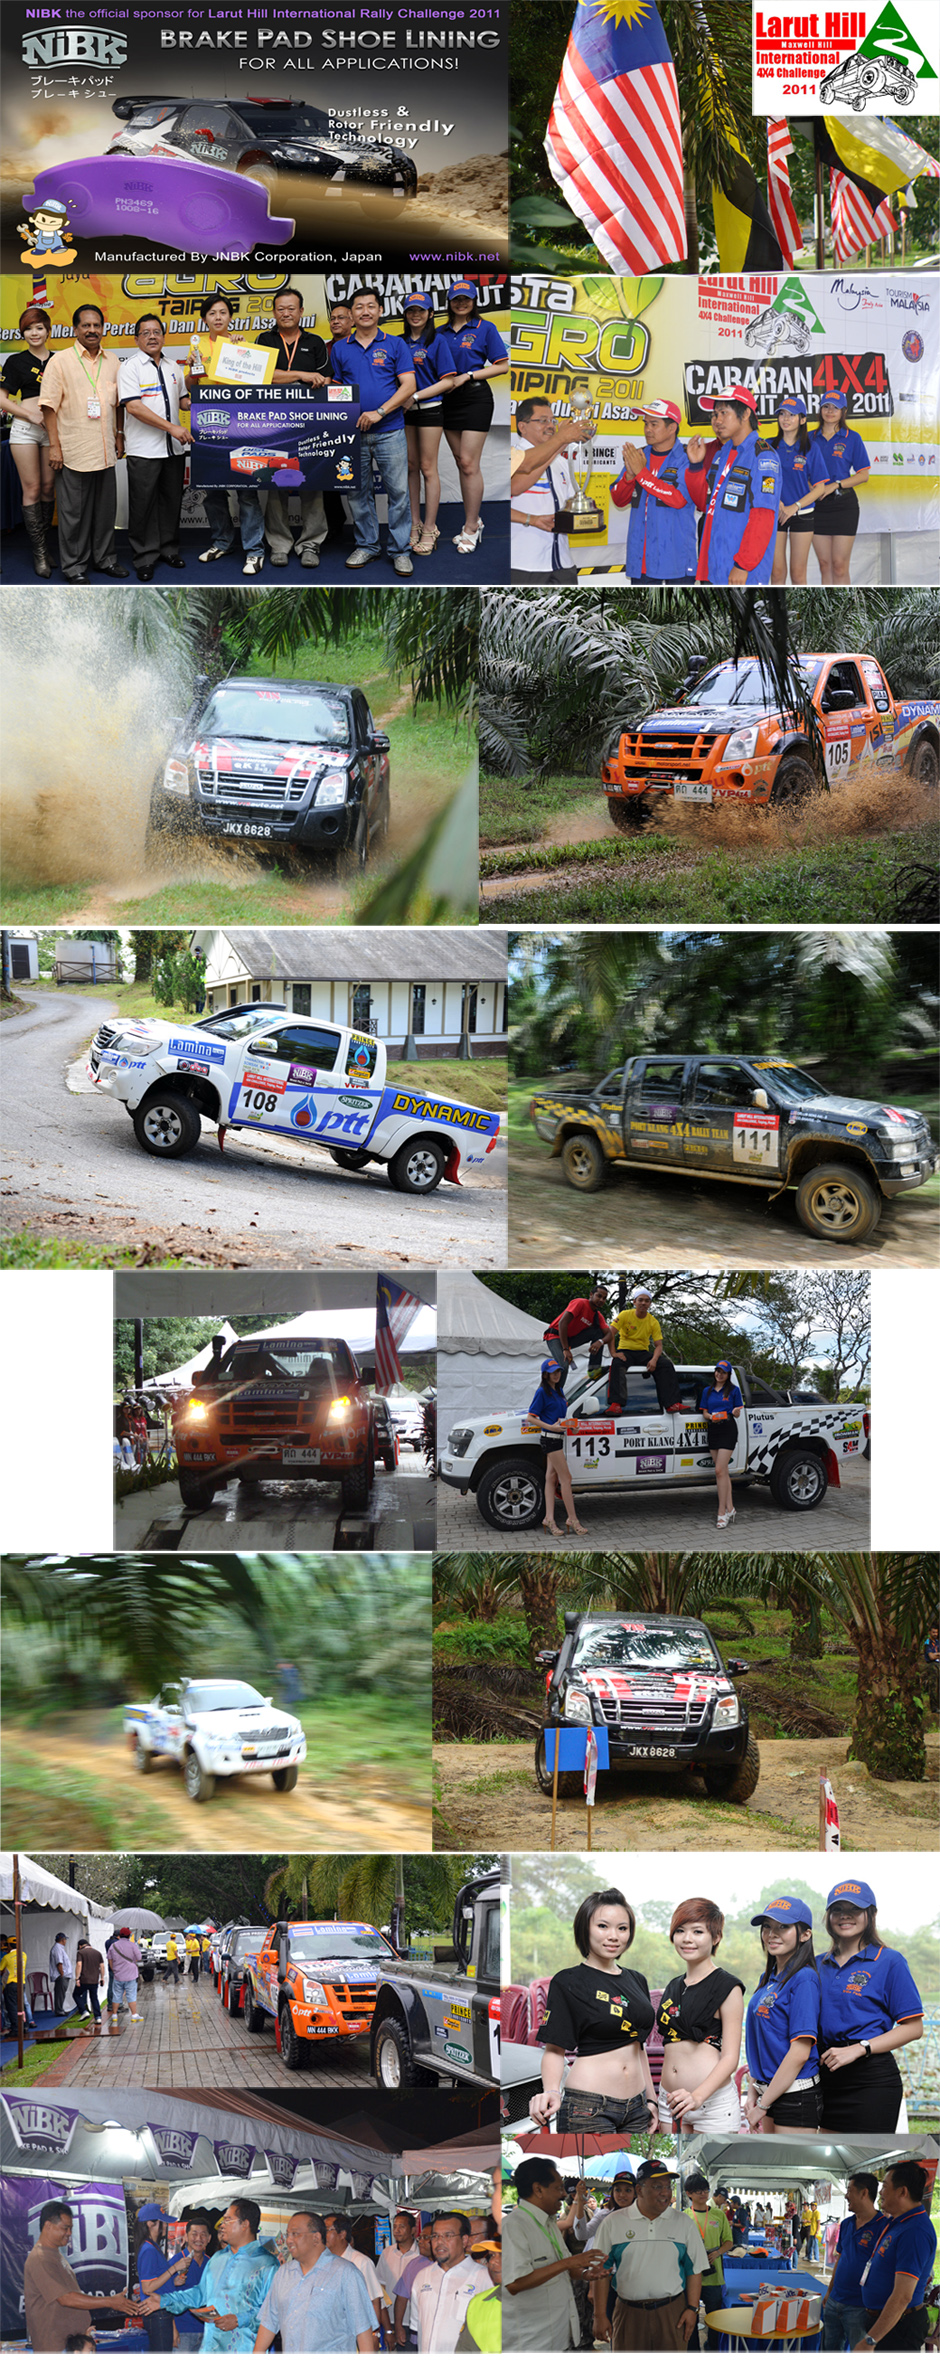 NiBK official sponsor for larut hill international rally 4x4 challenge 2011